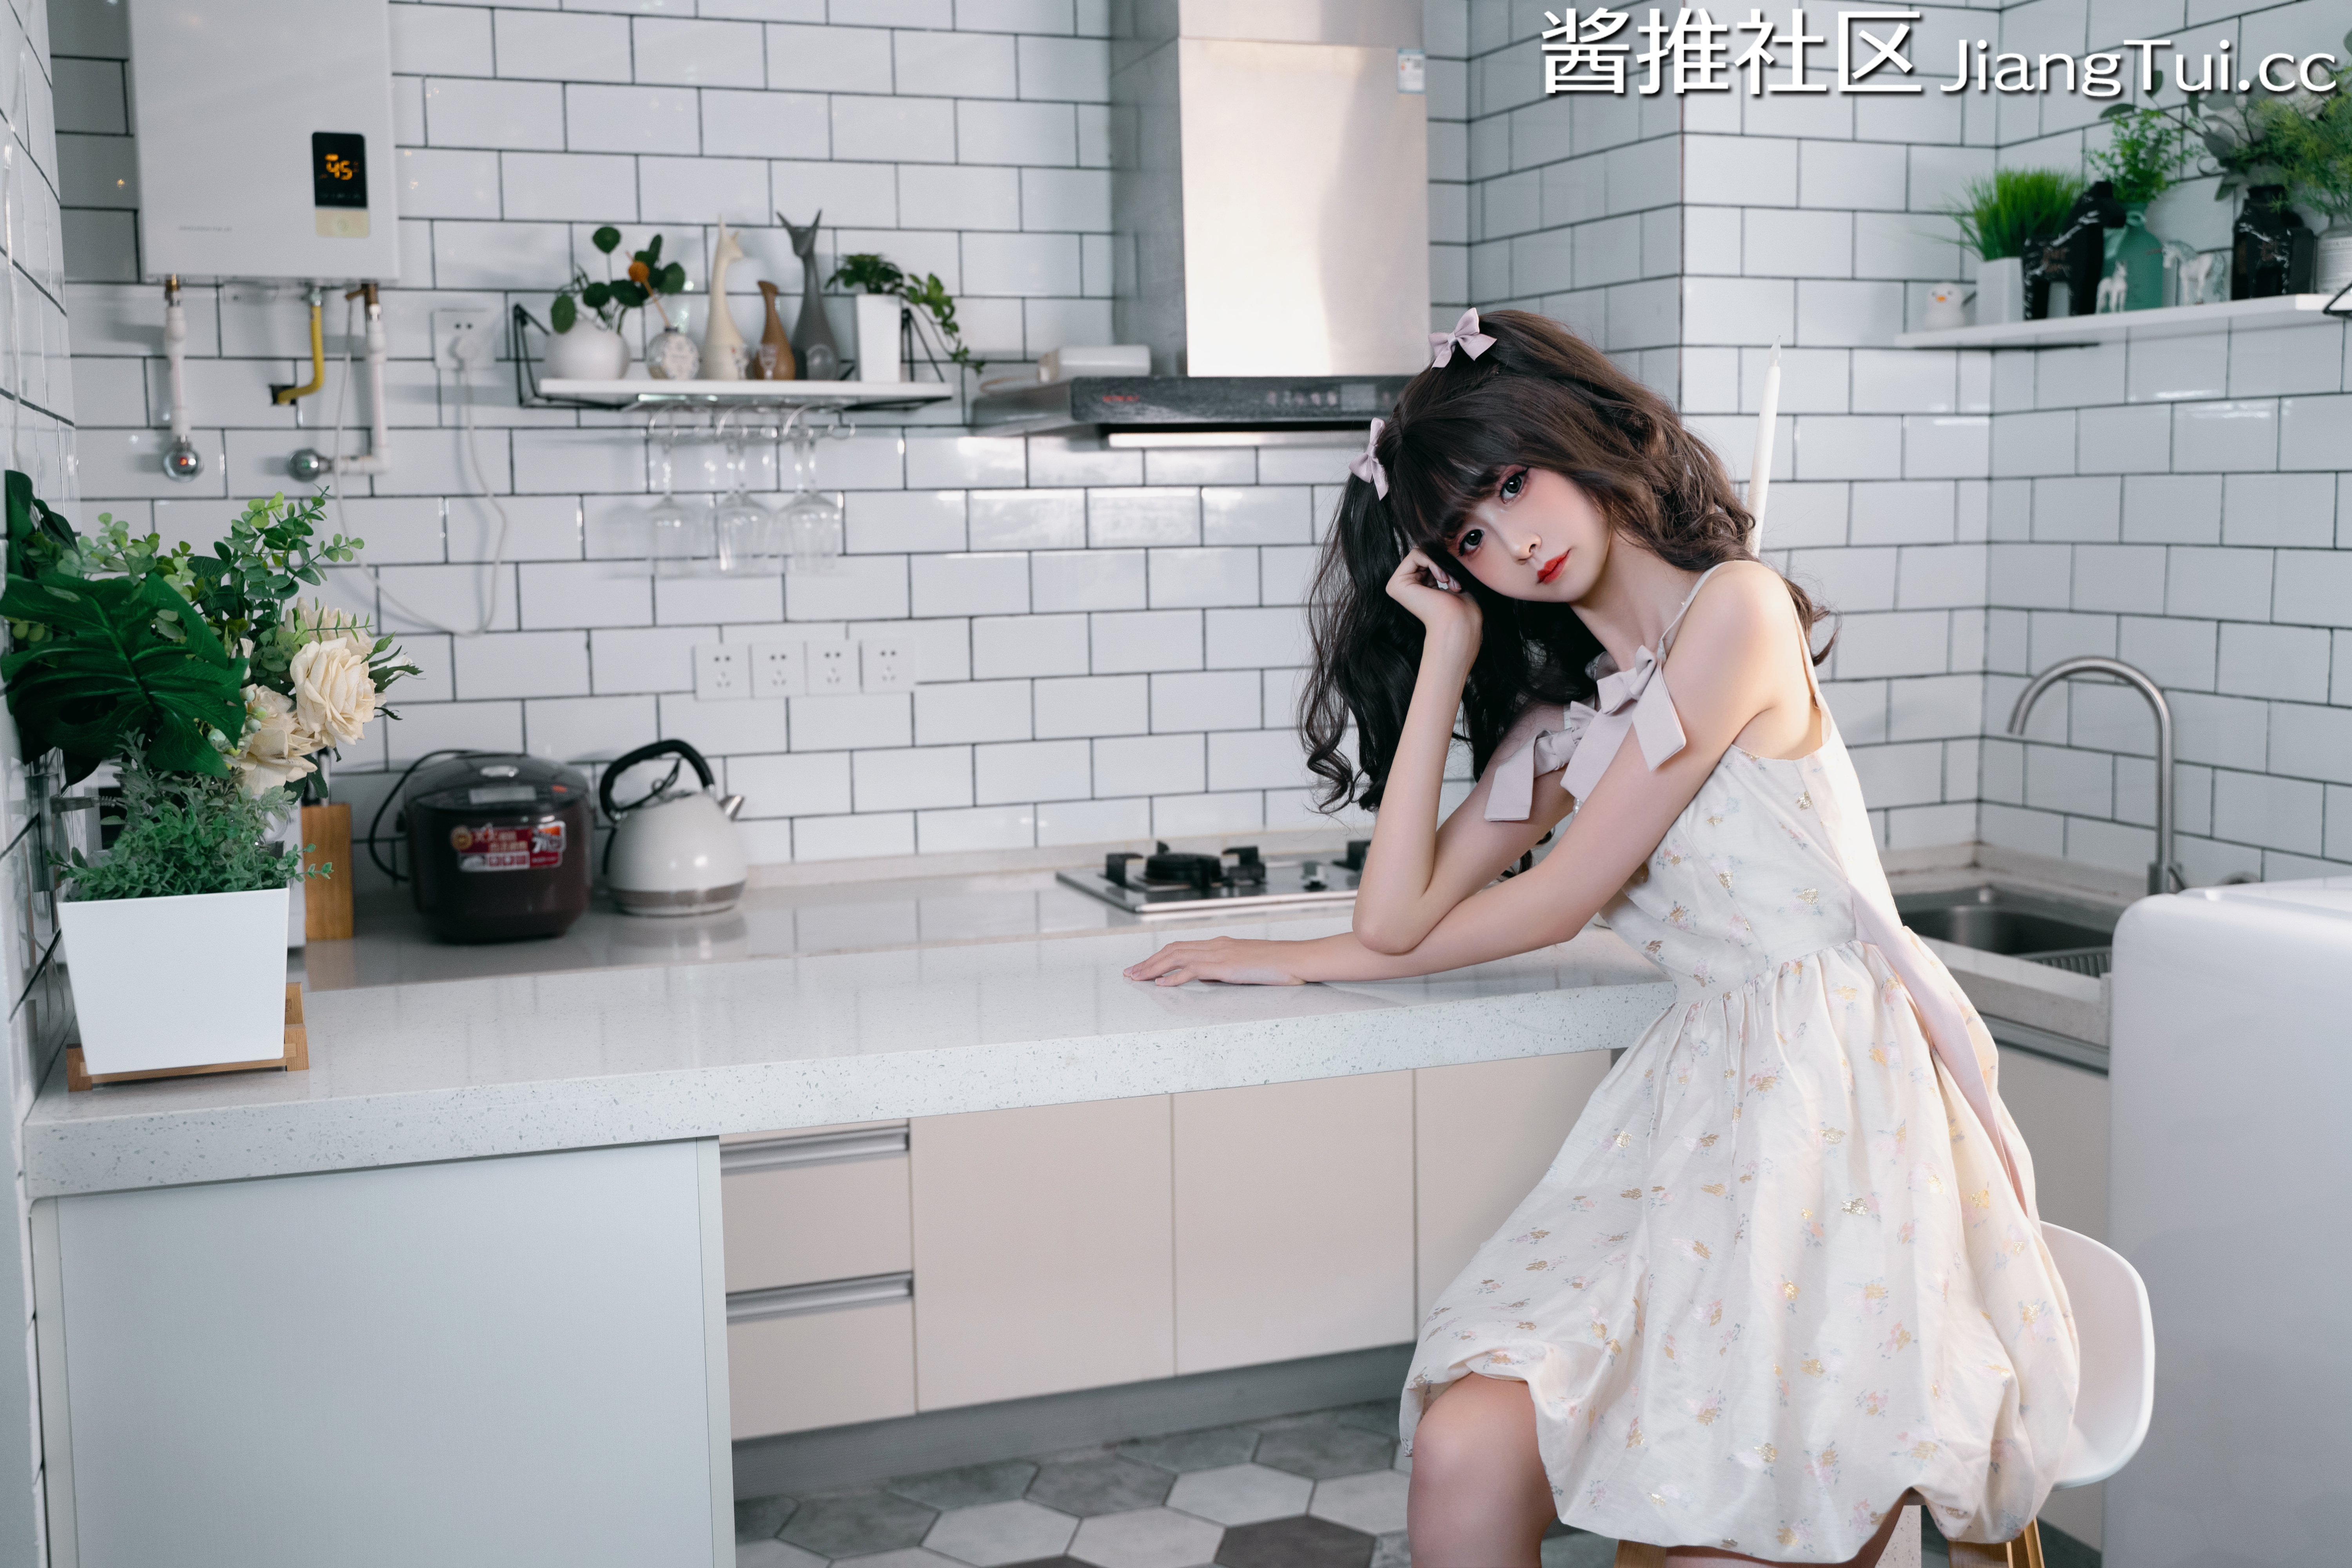 Asian Women Dress Kitchen 6000x4000